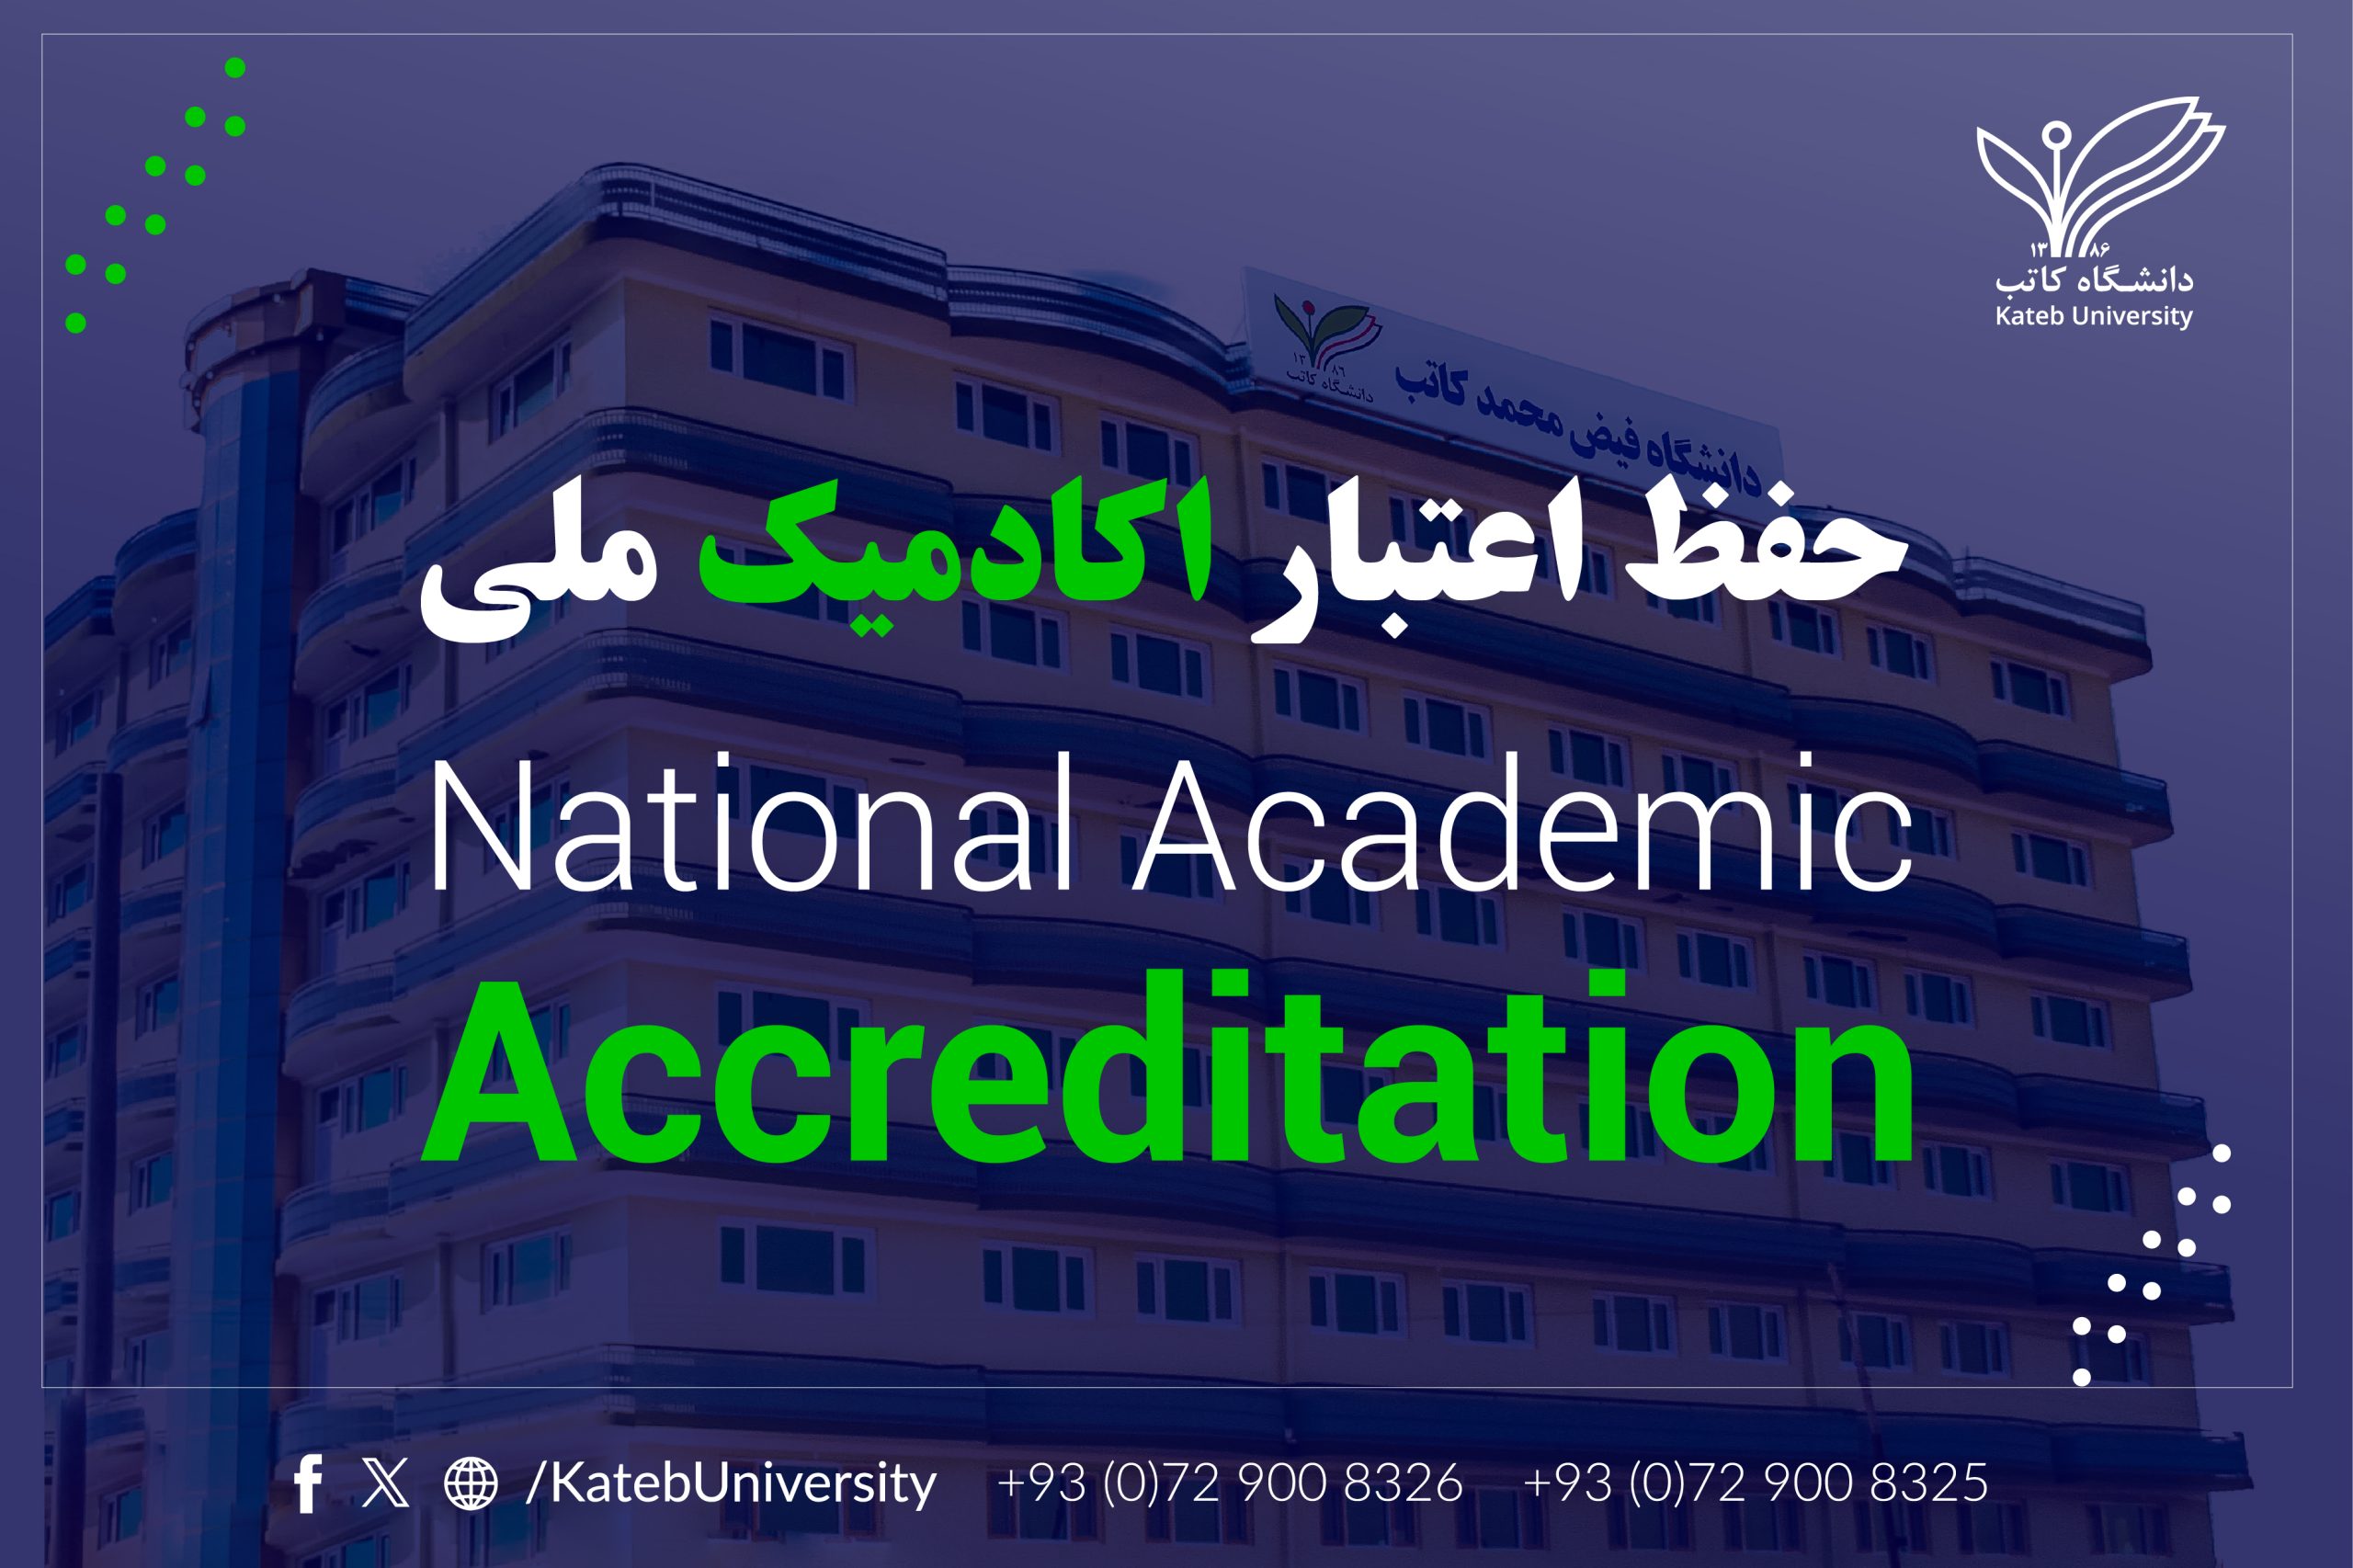 Maintaining National Academic Accreditation